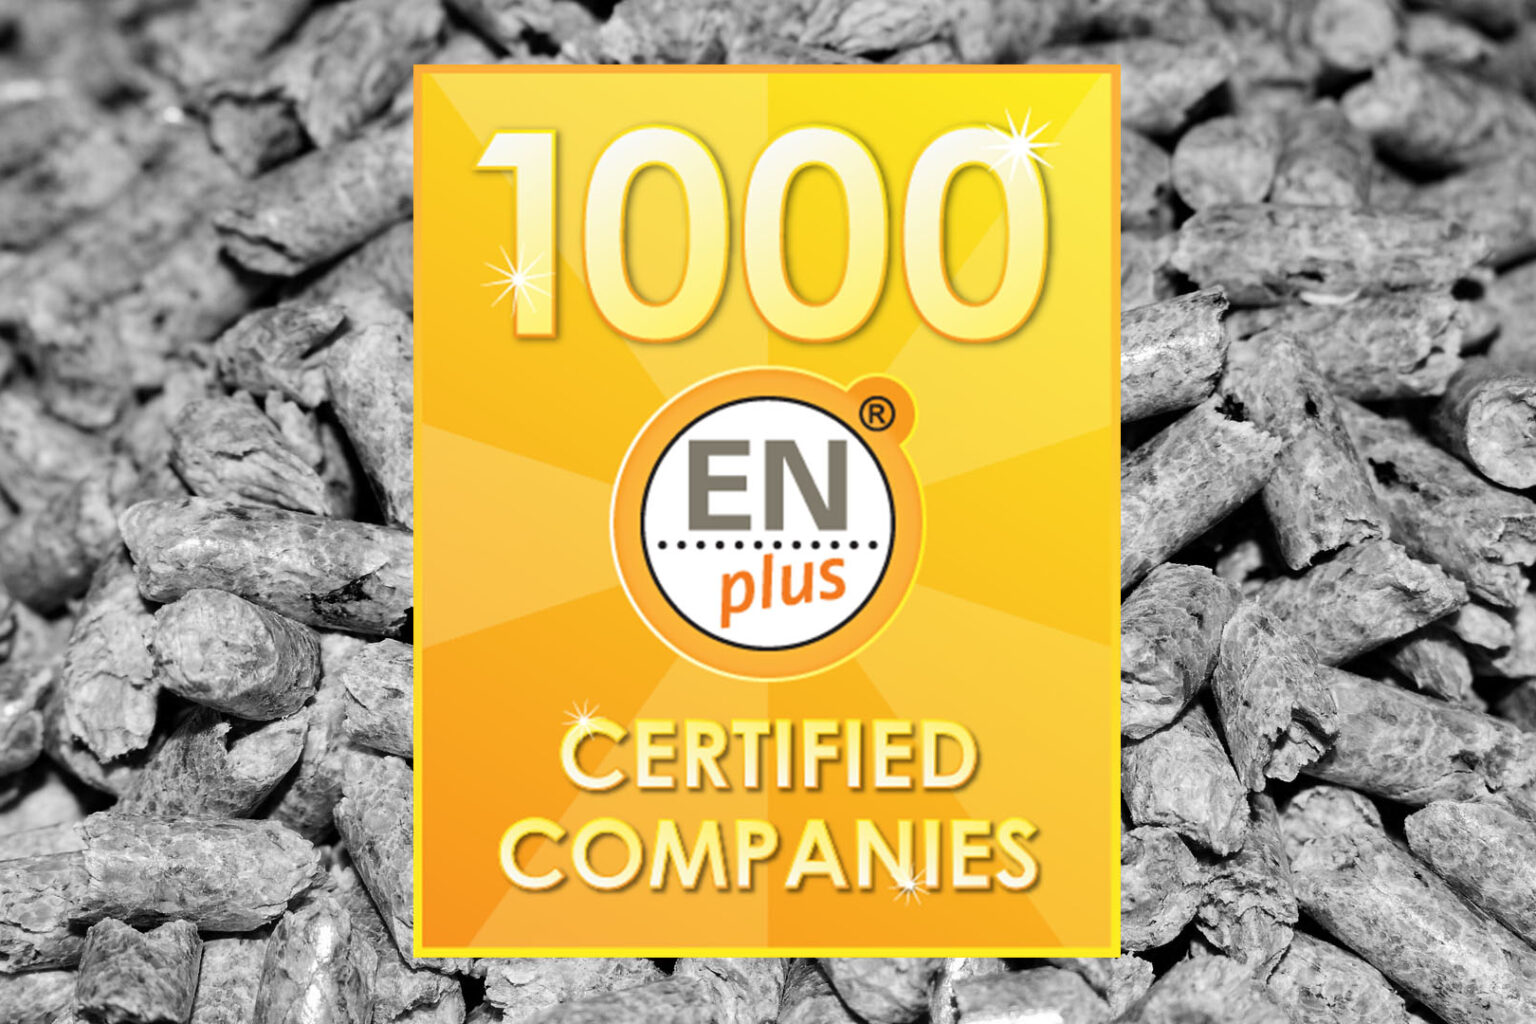 Mille aziende fra produttori e trader certificati ENplus